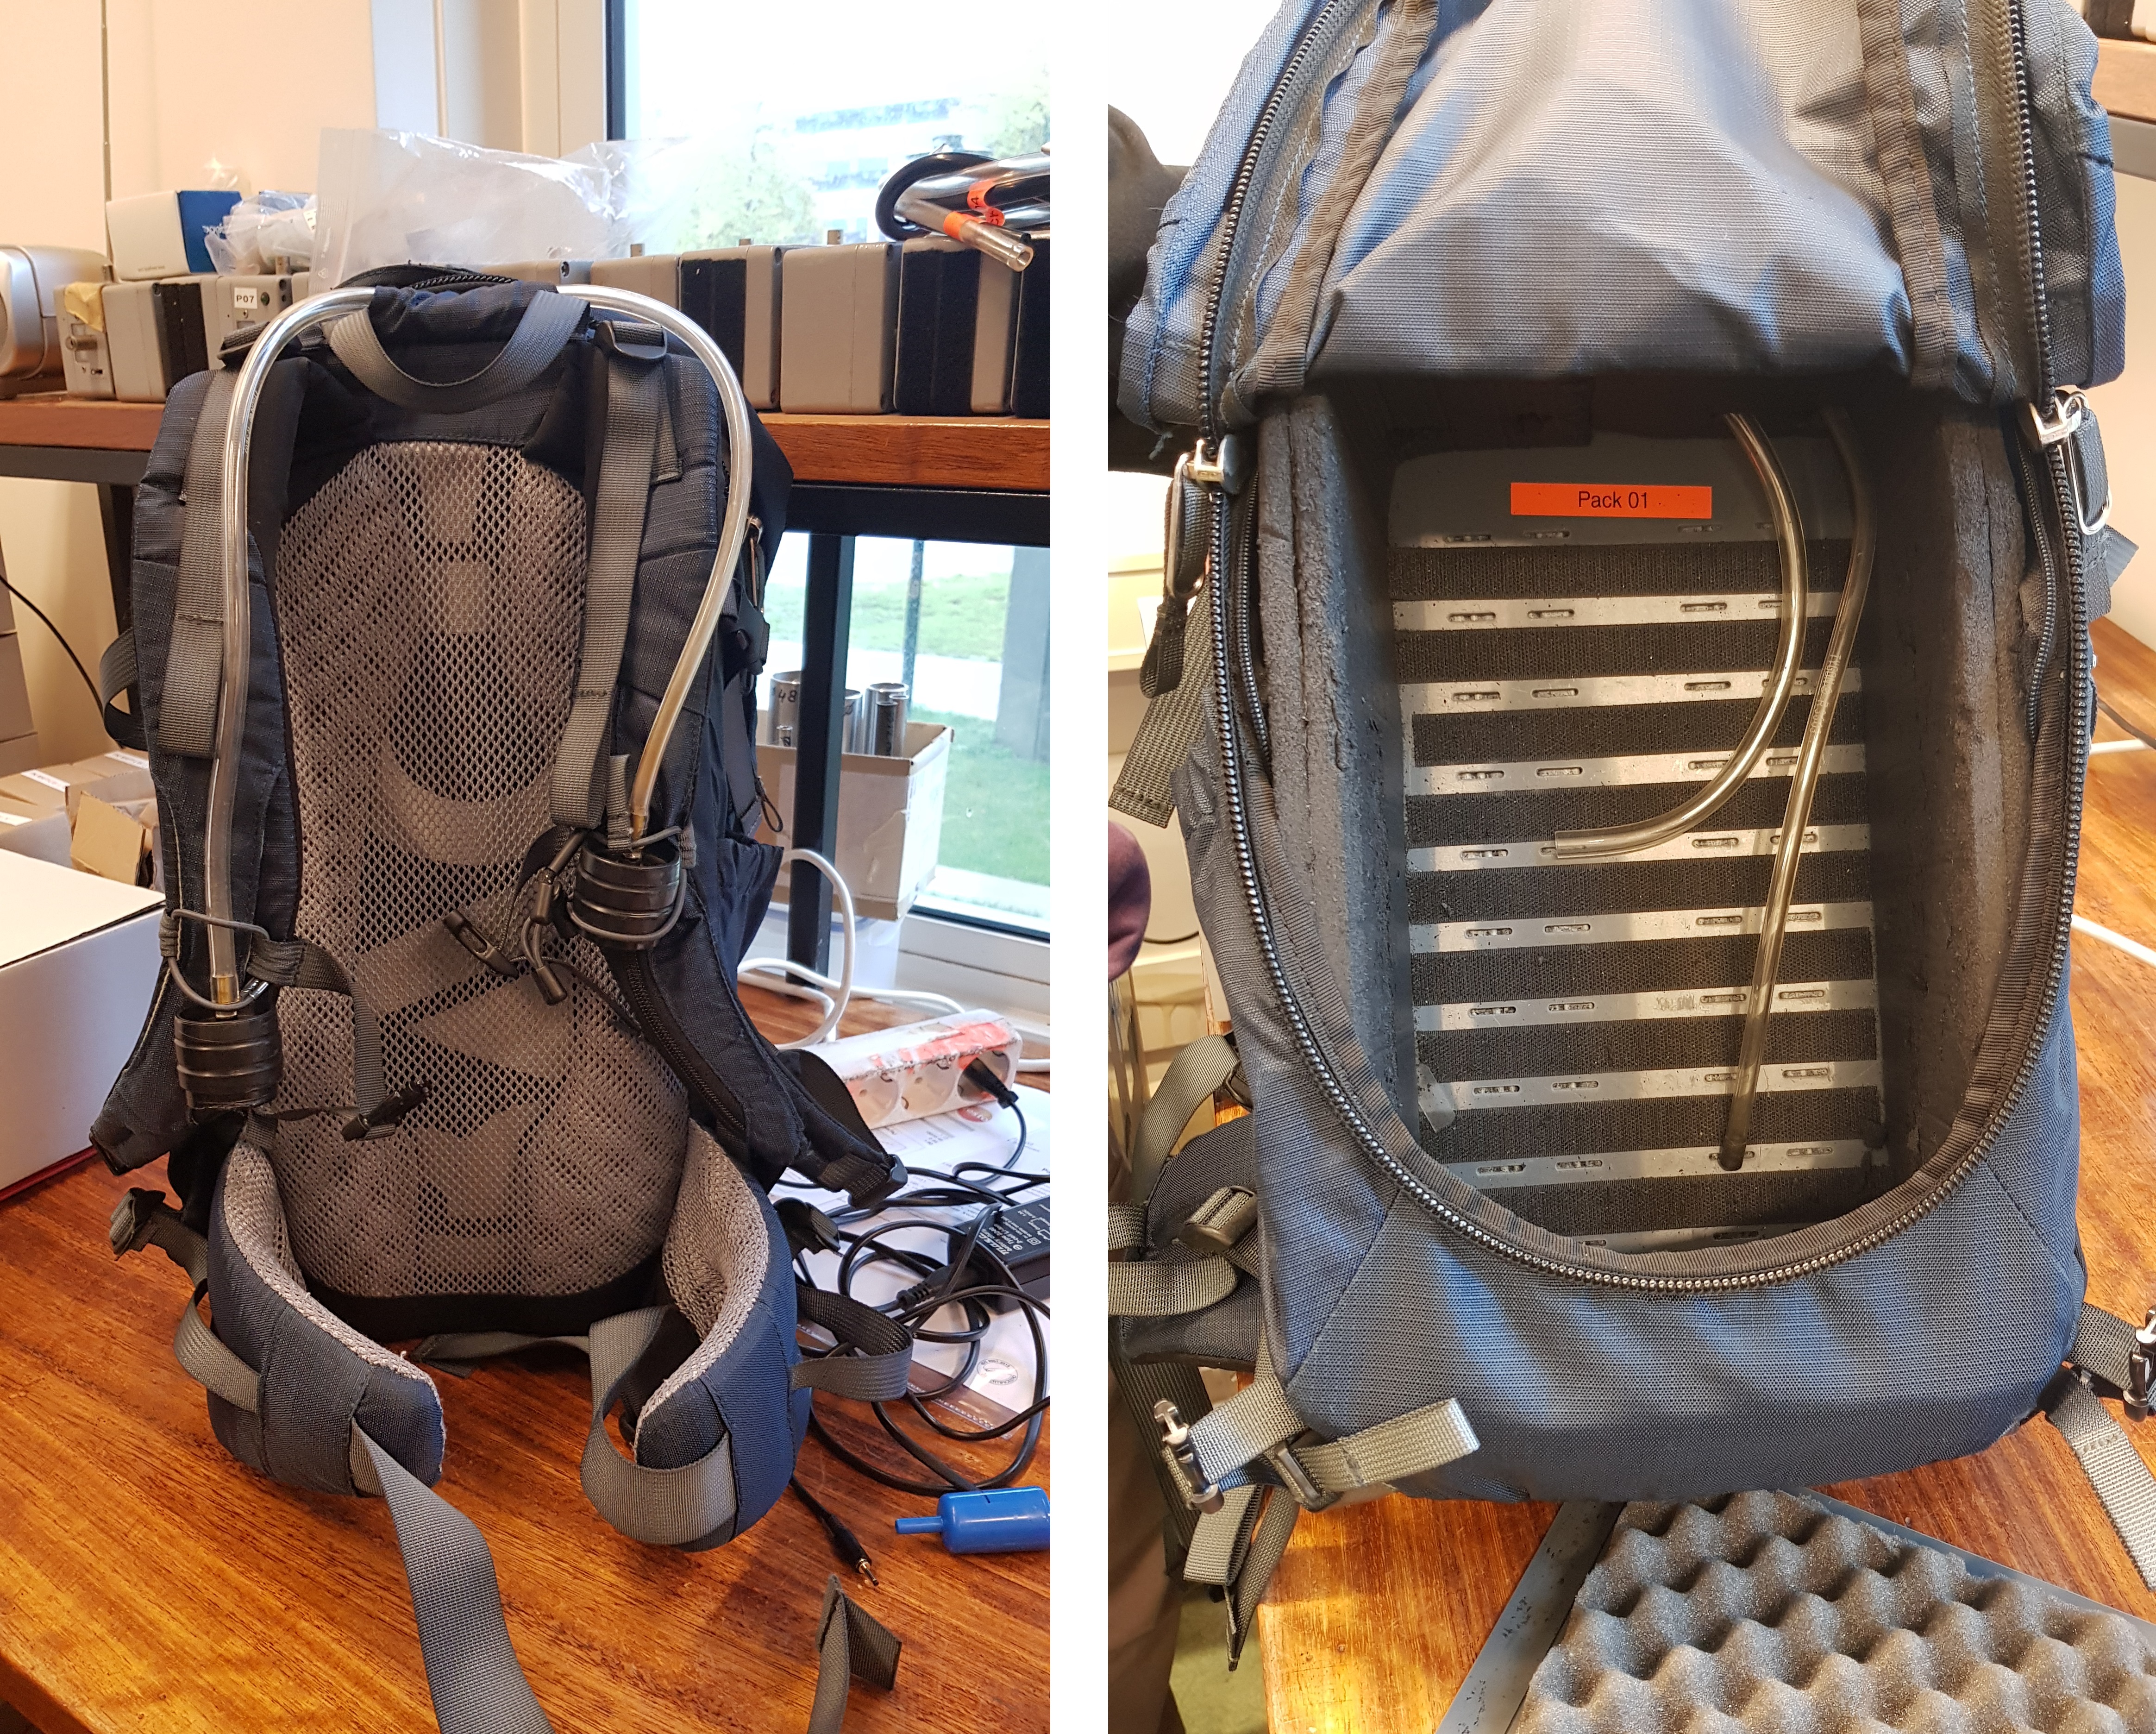 Backpack measurement kit